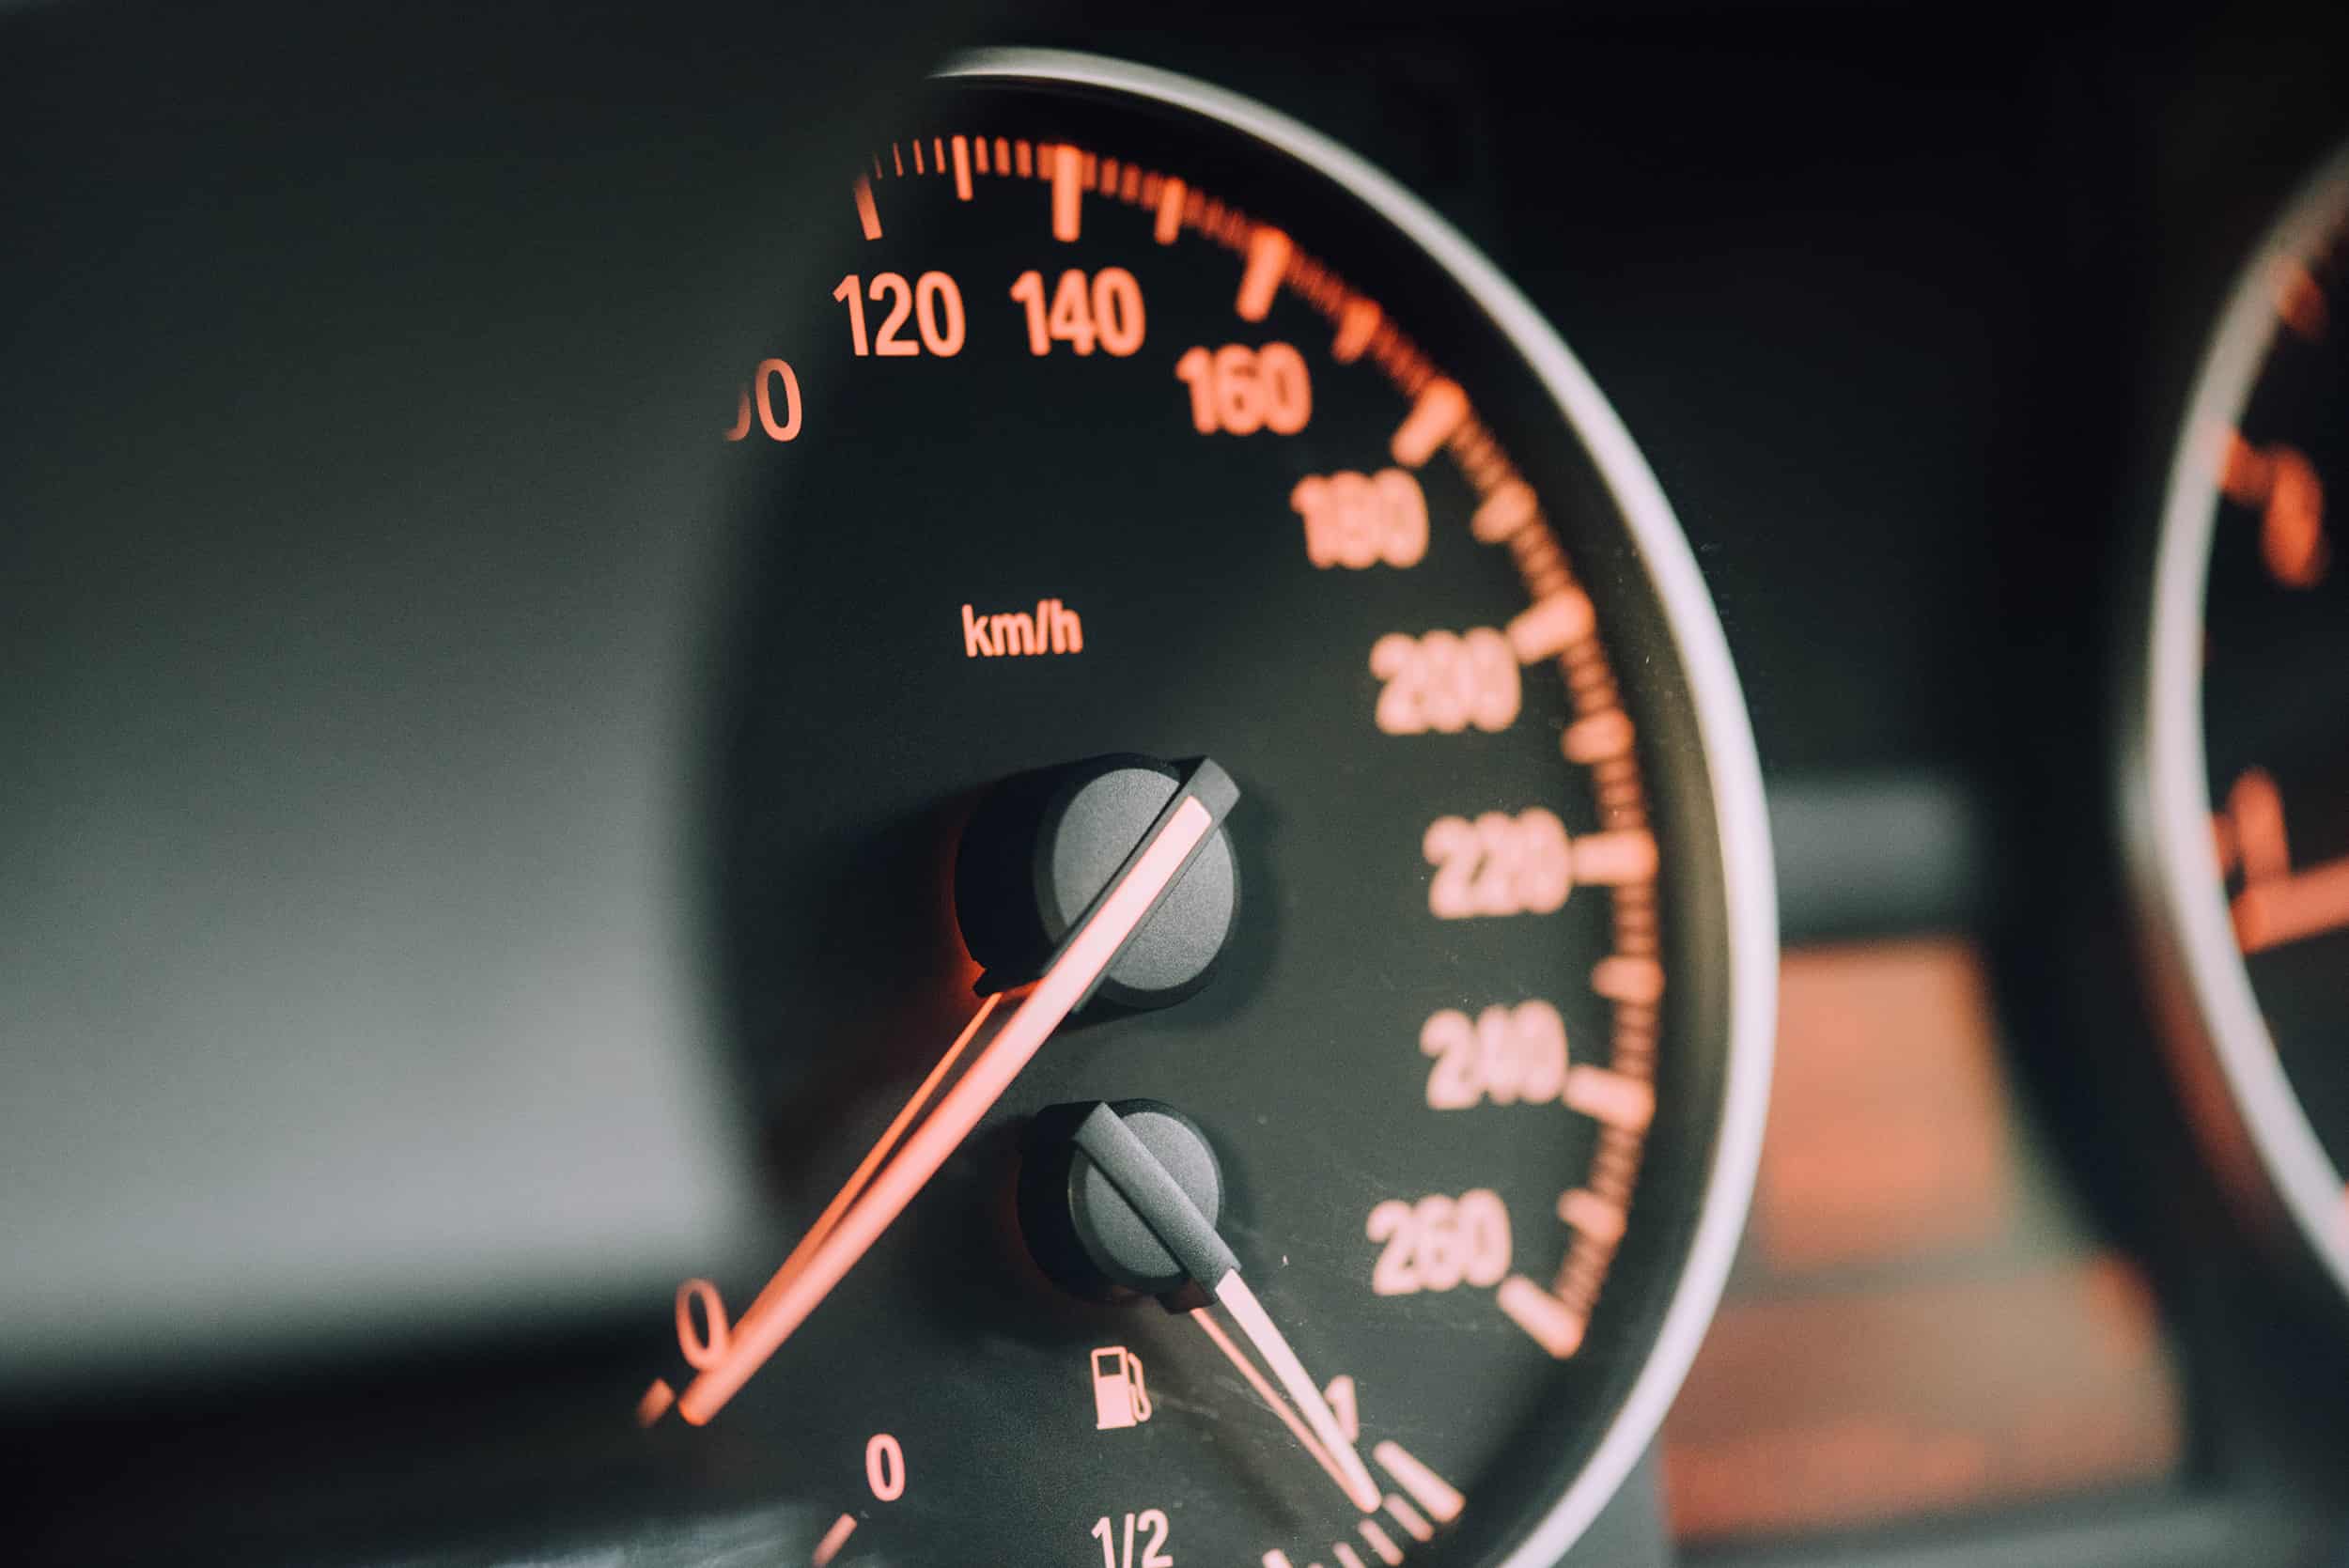 A speedometer